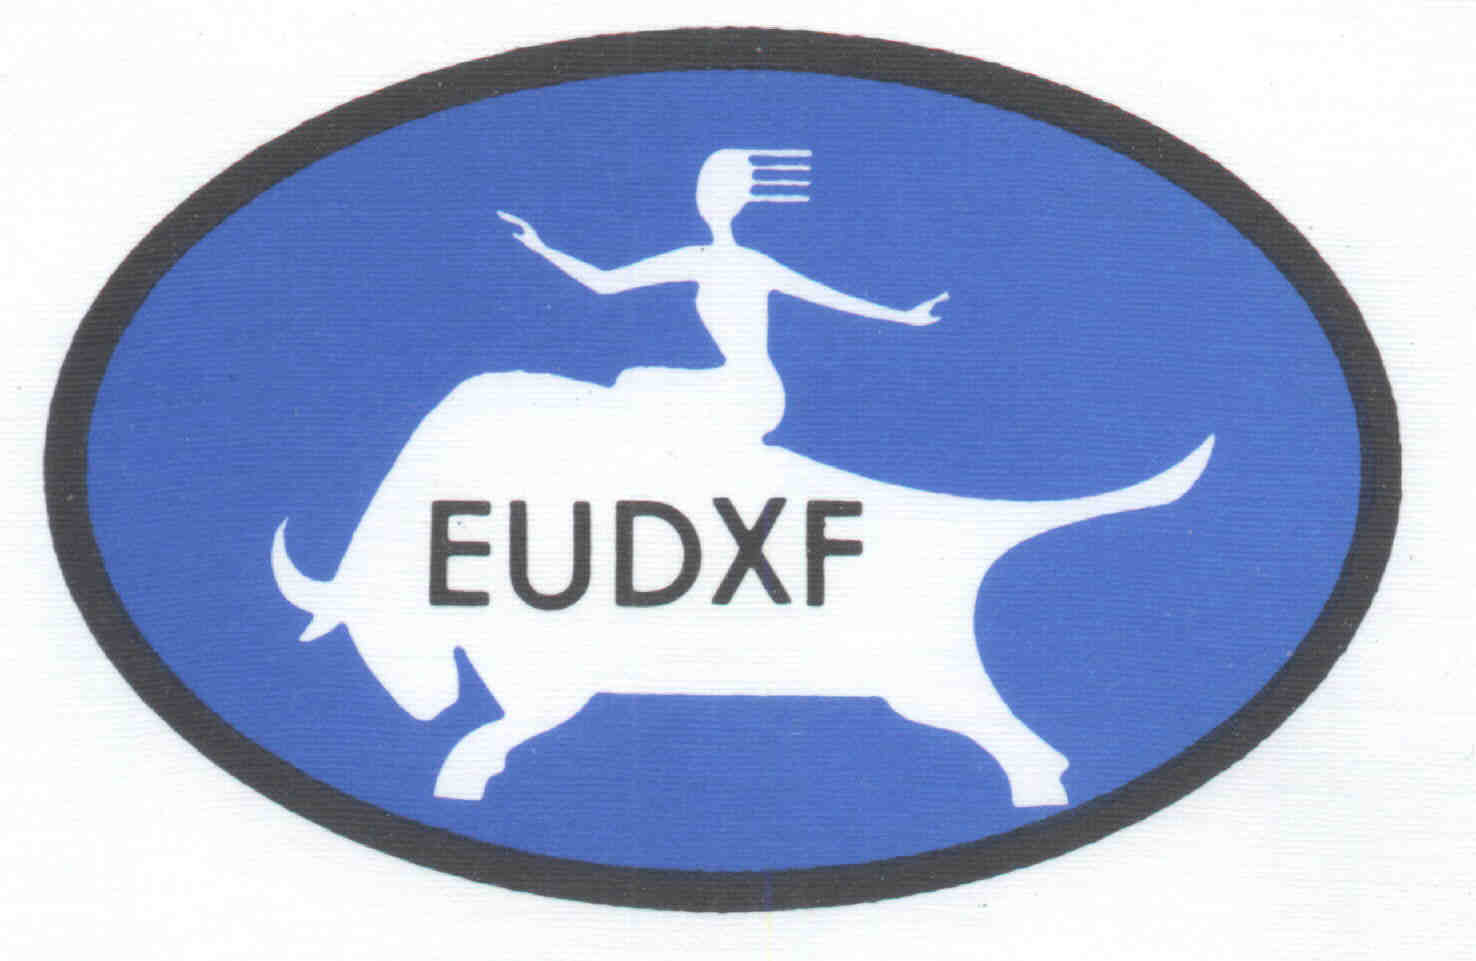 eudxf